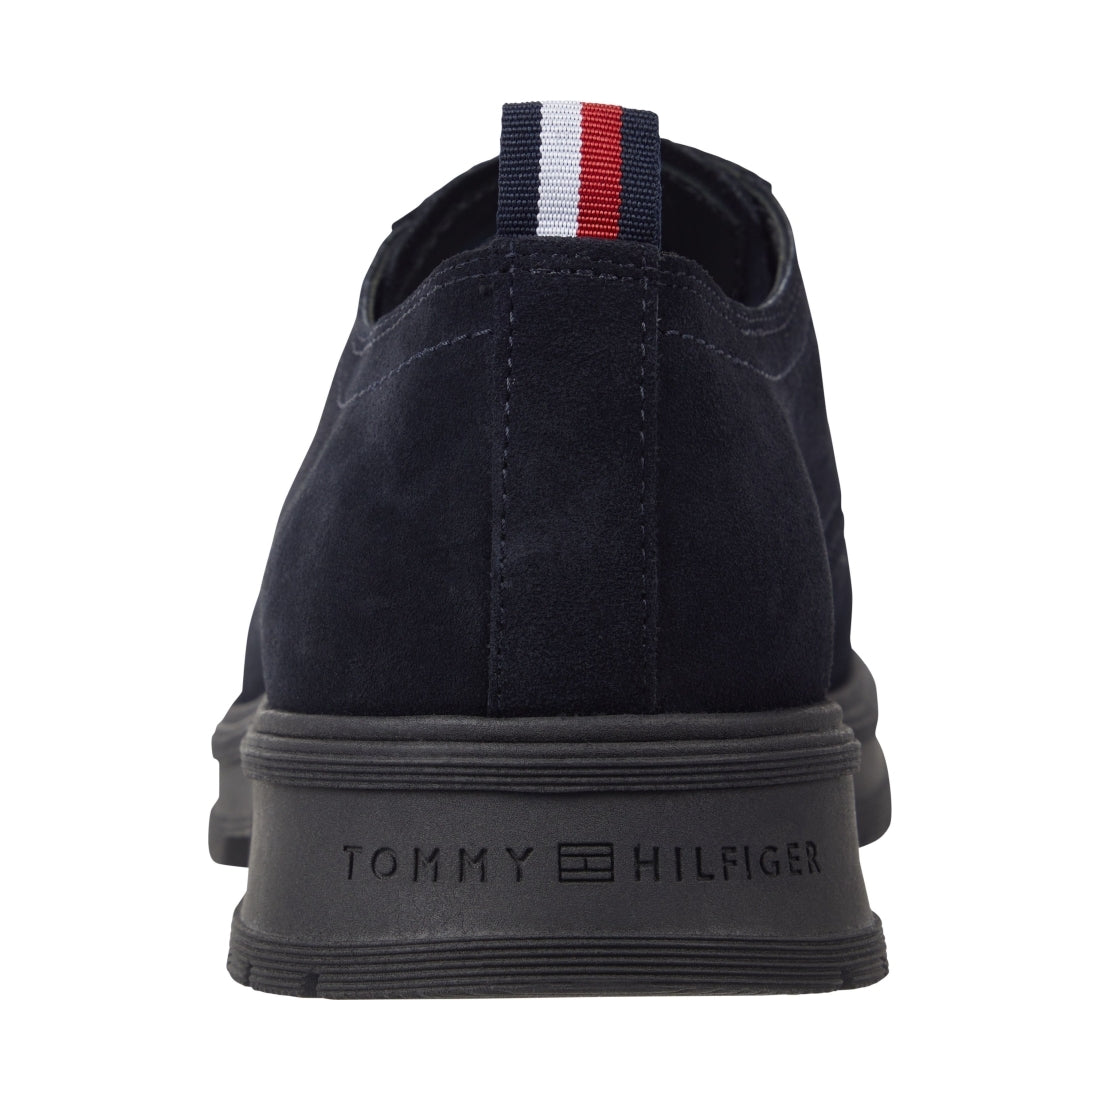 Tommy Hilfiger mens desert sky core shoe | Vilbury London